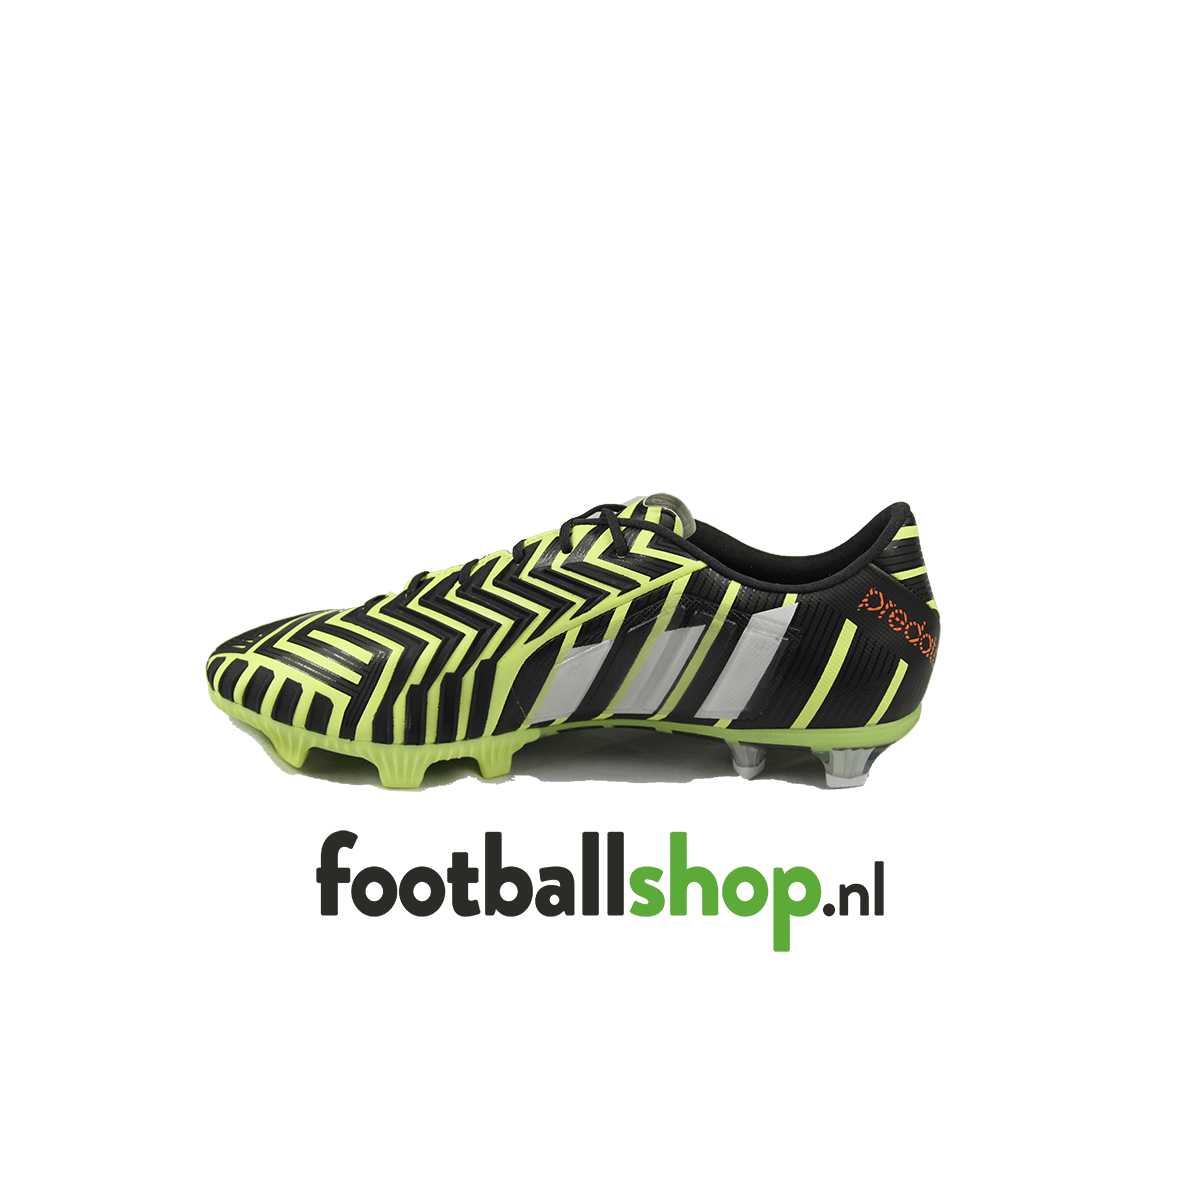 het dossier D.w.z alcohol Adidas Predator Instinct TRX FG – Geel/Zwart kopen - Footballshop.nl -  Footballshop.nl